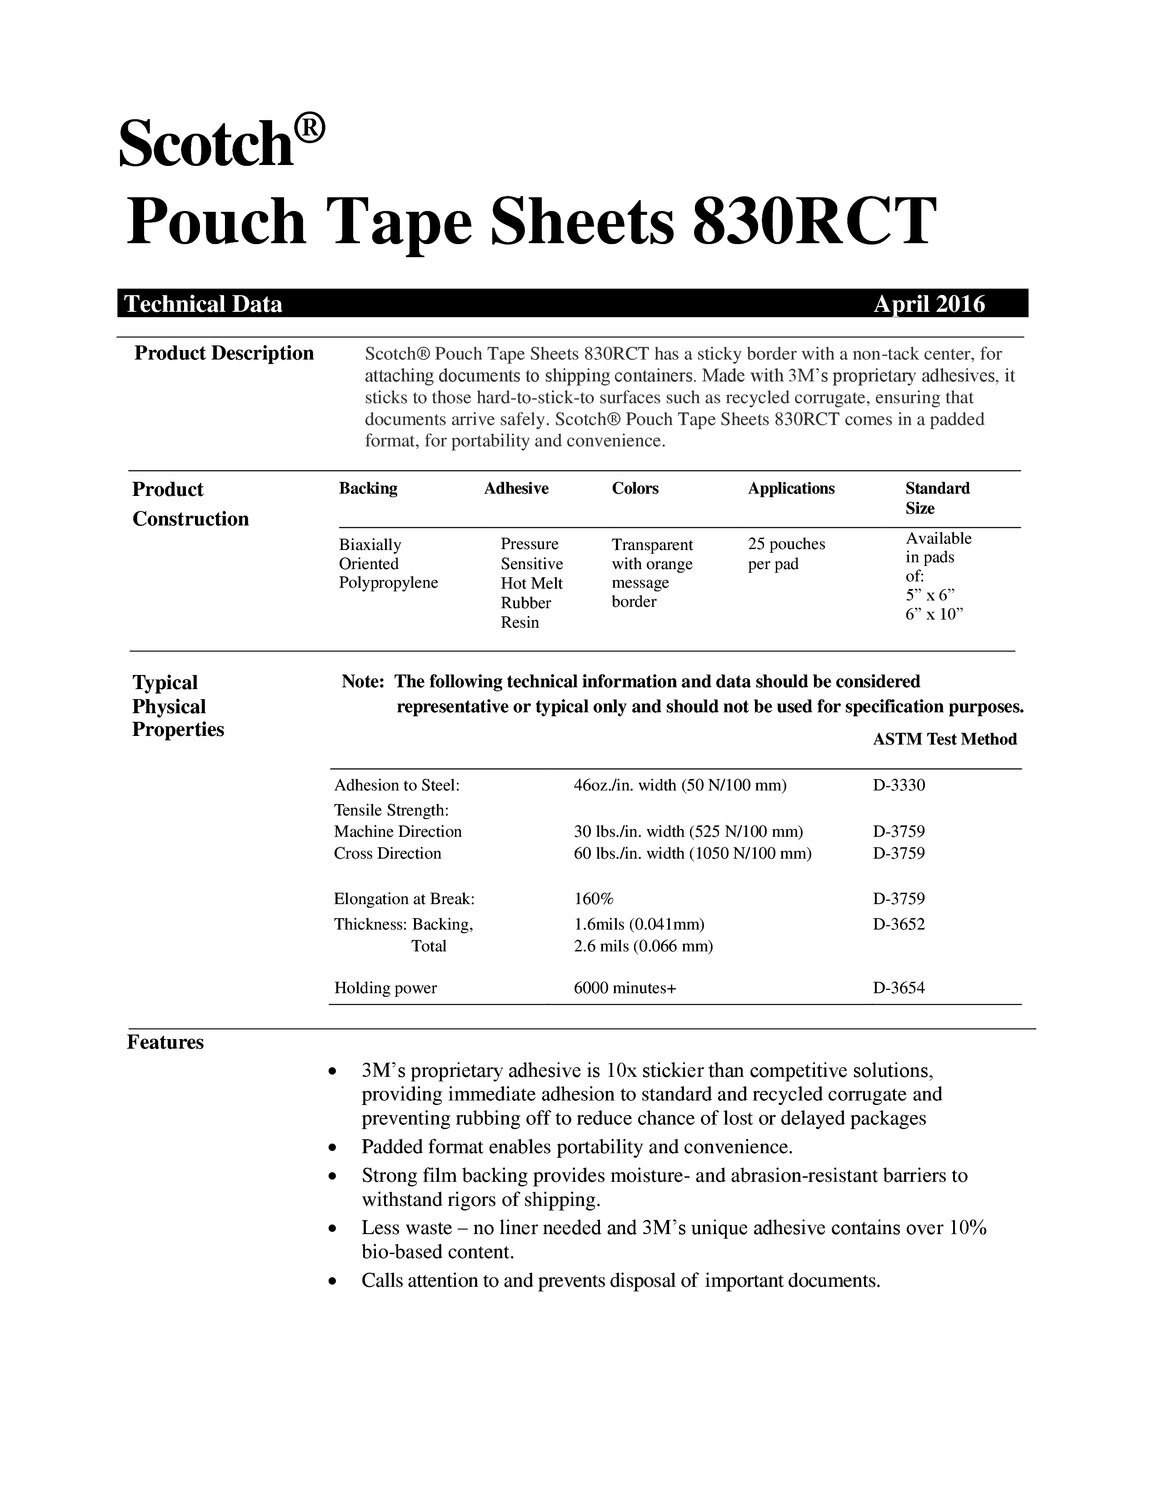 Scotch Tape Removeable Chalkboard Tape, 1.88 Wide, 15ft, Black